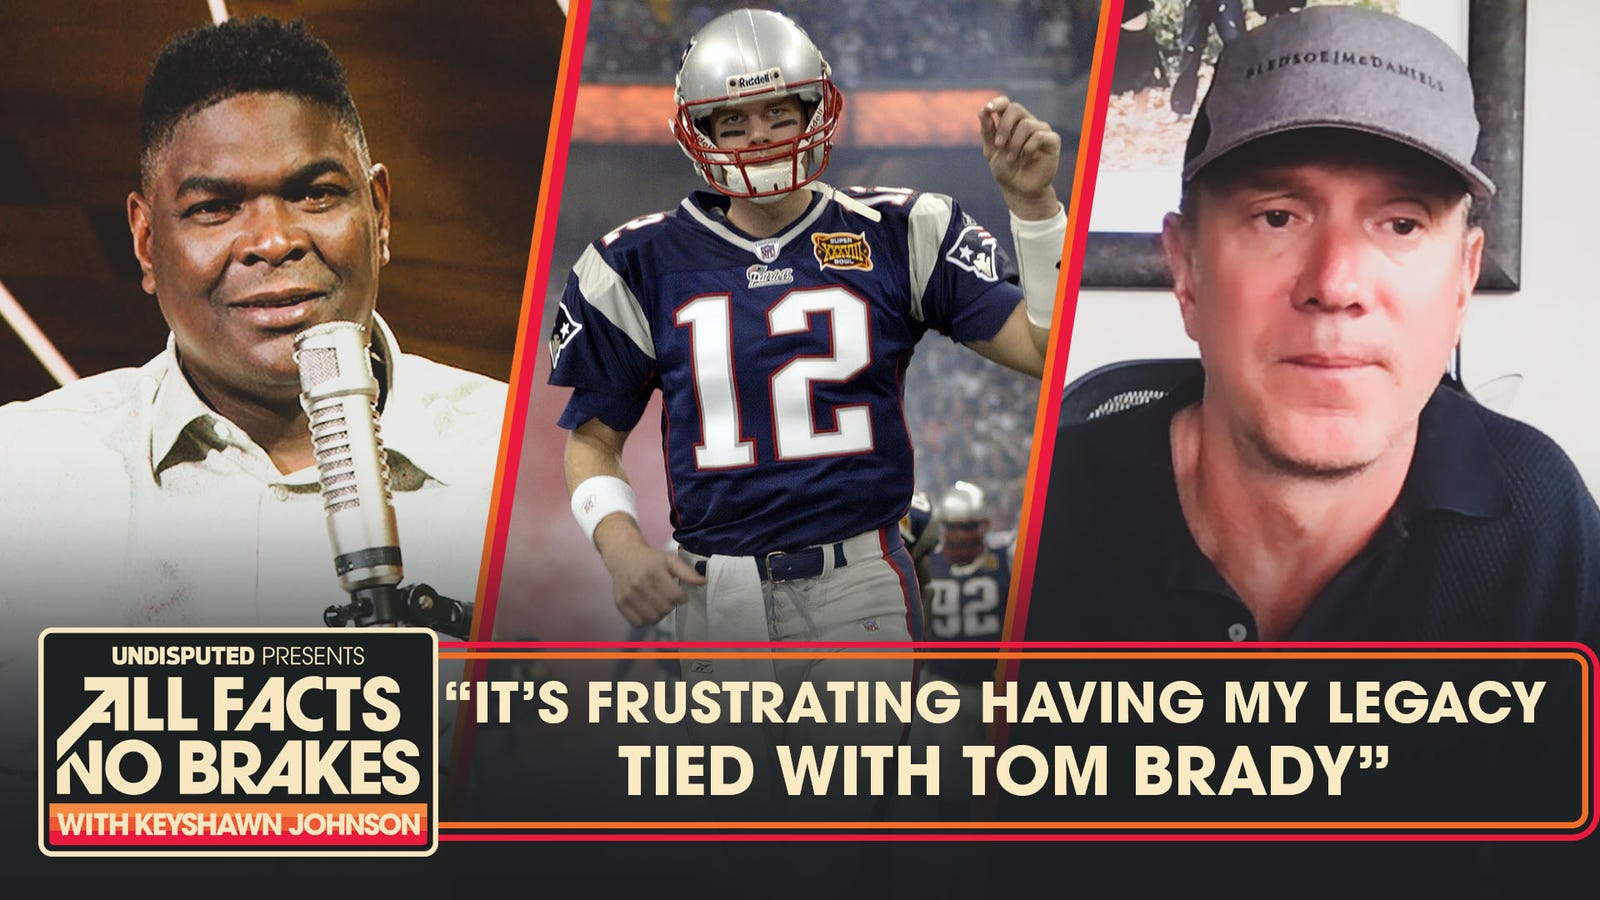 Drew Bledsoe: It's 'frustrating' having career tied to Tom Brady